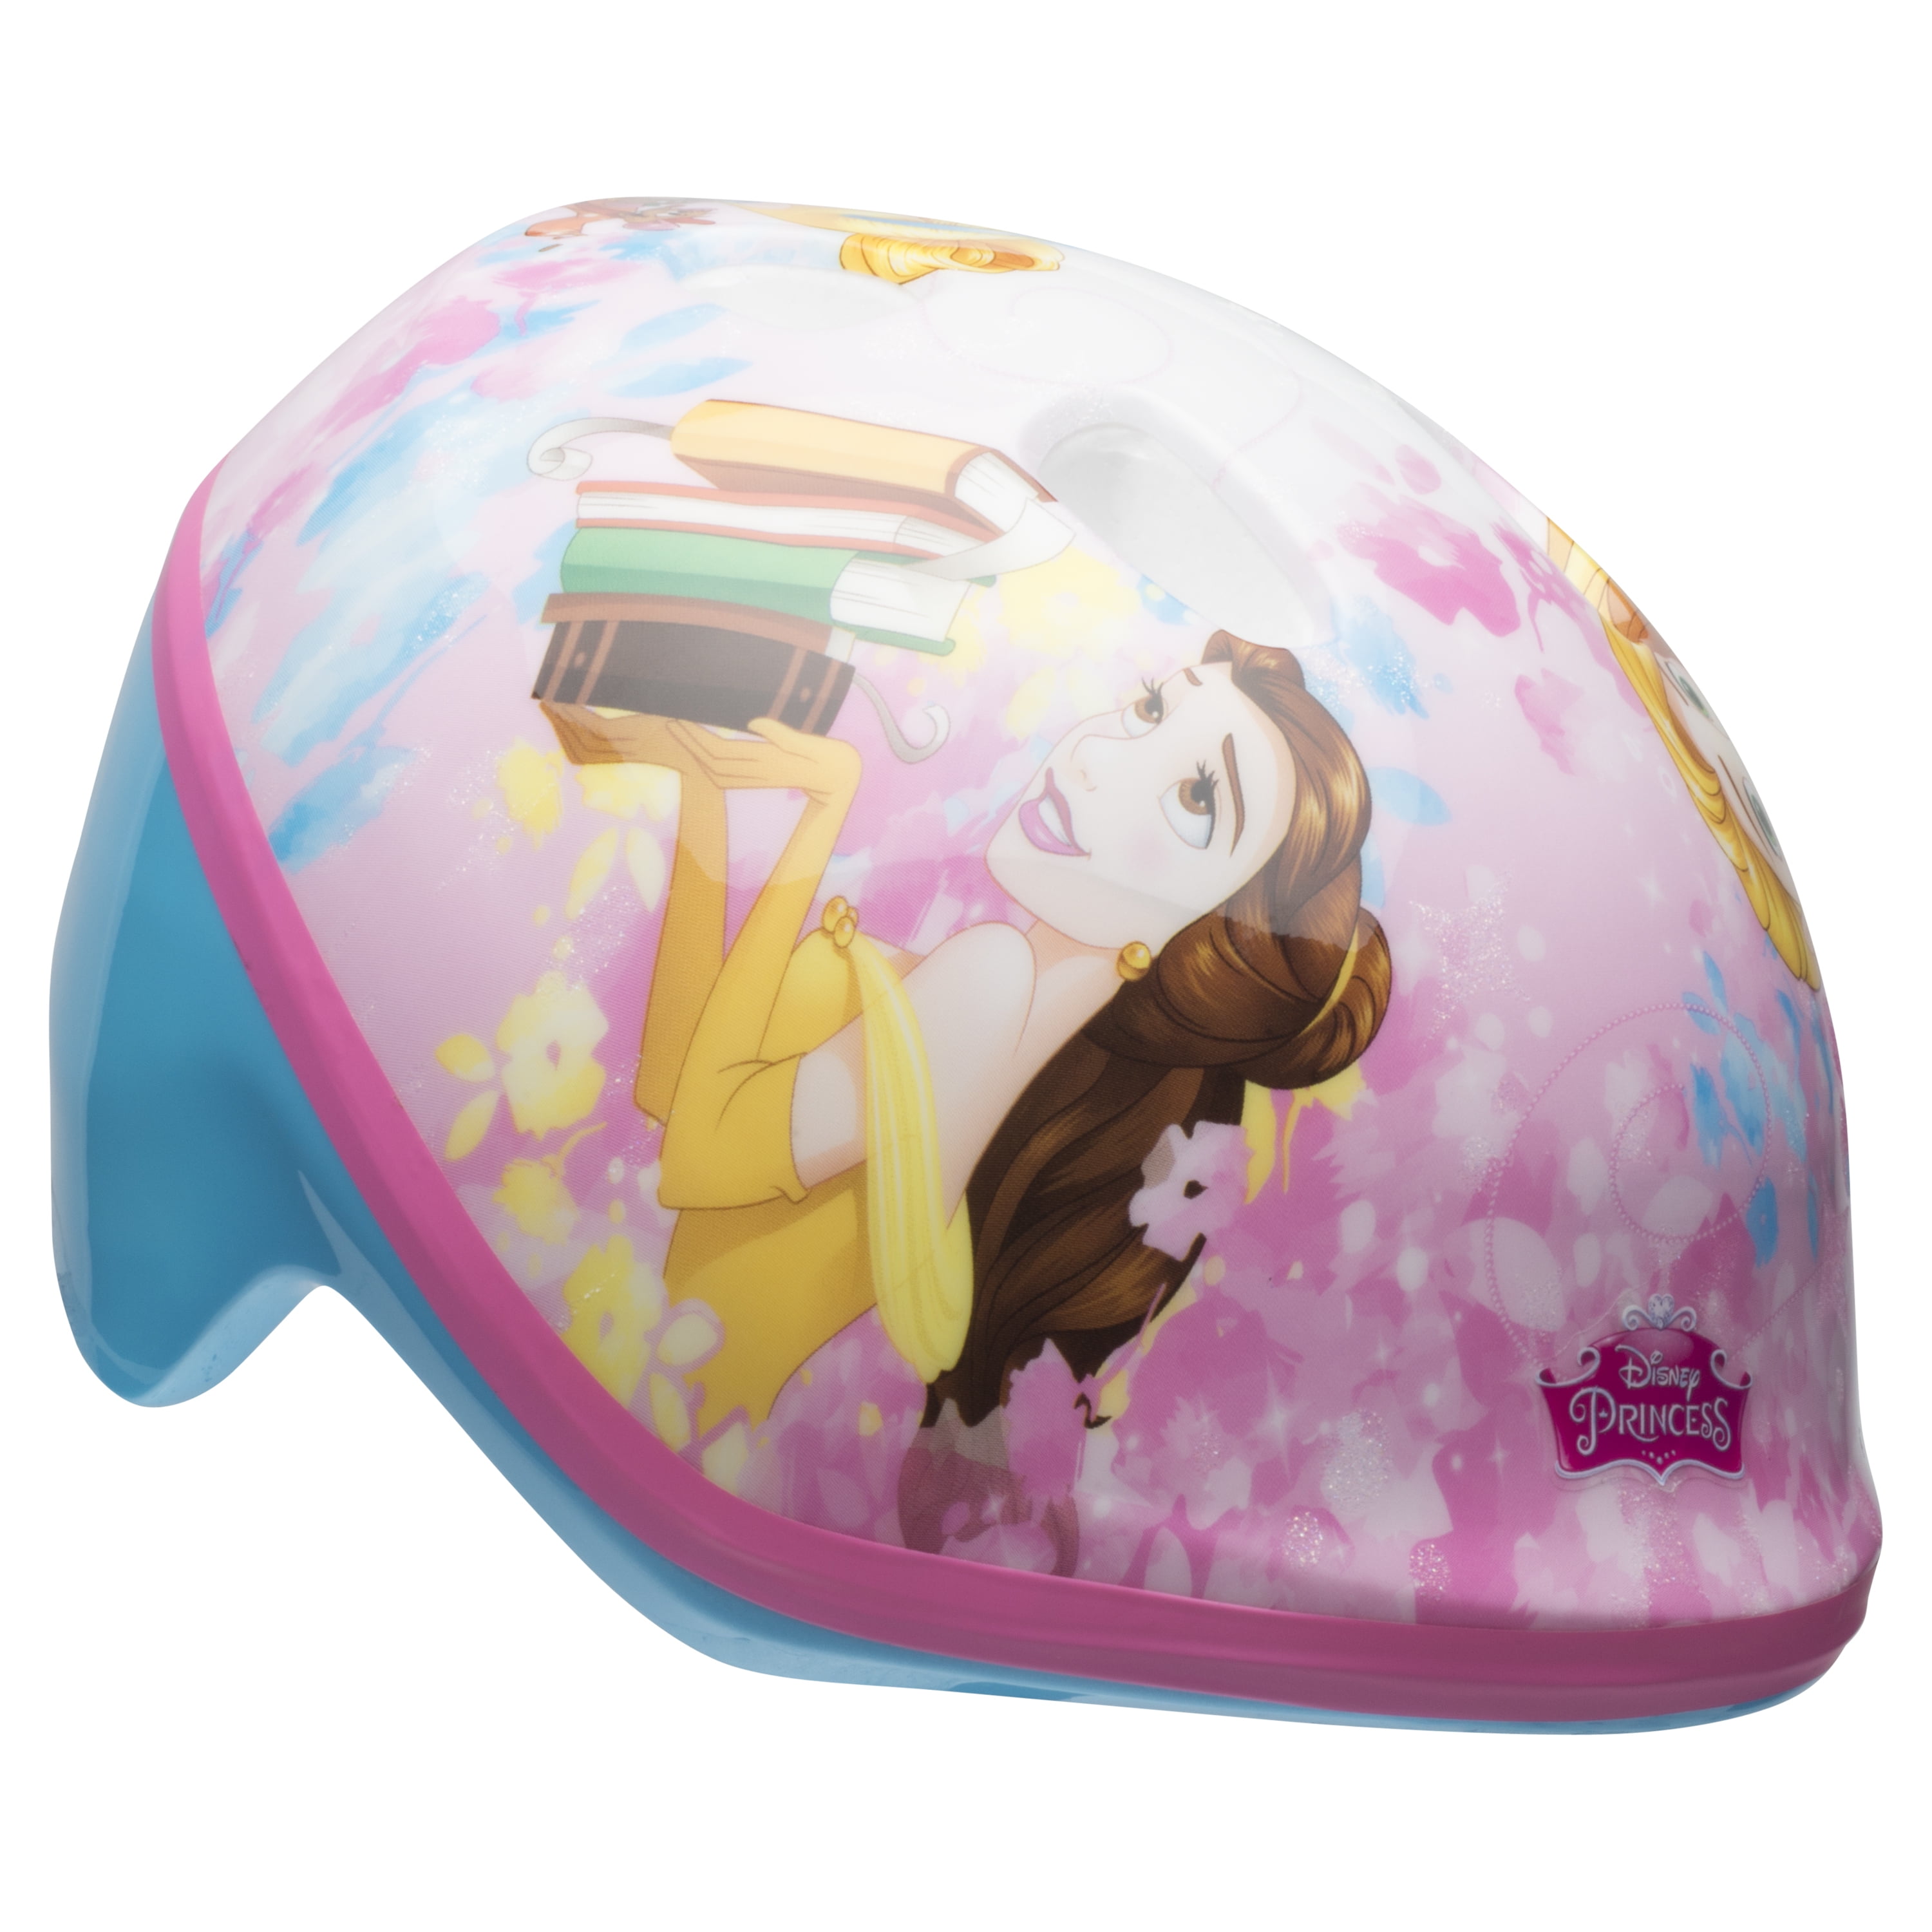 NEW Bell Disney Minnie Mouse Bike Skateboard Helmet Pink Toddler Kids 3-5 Years. 